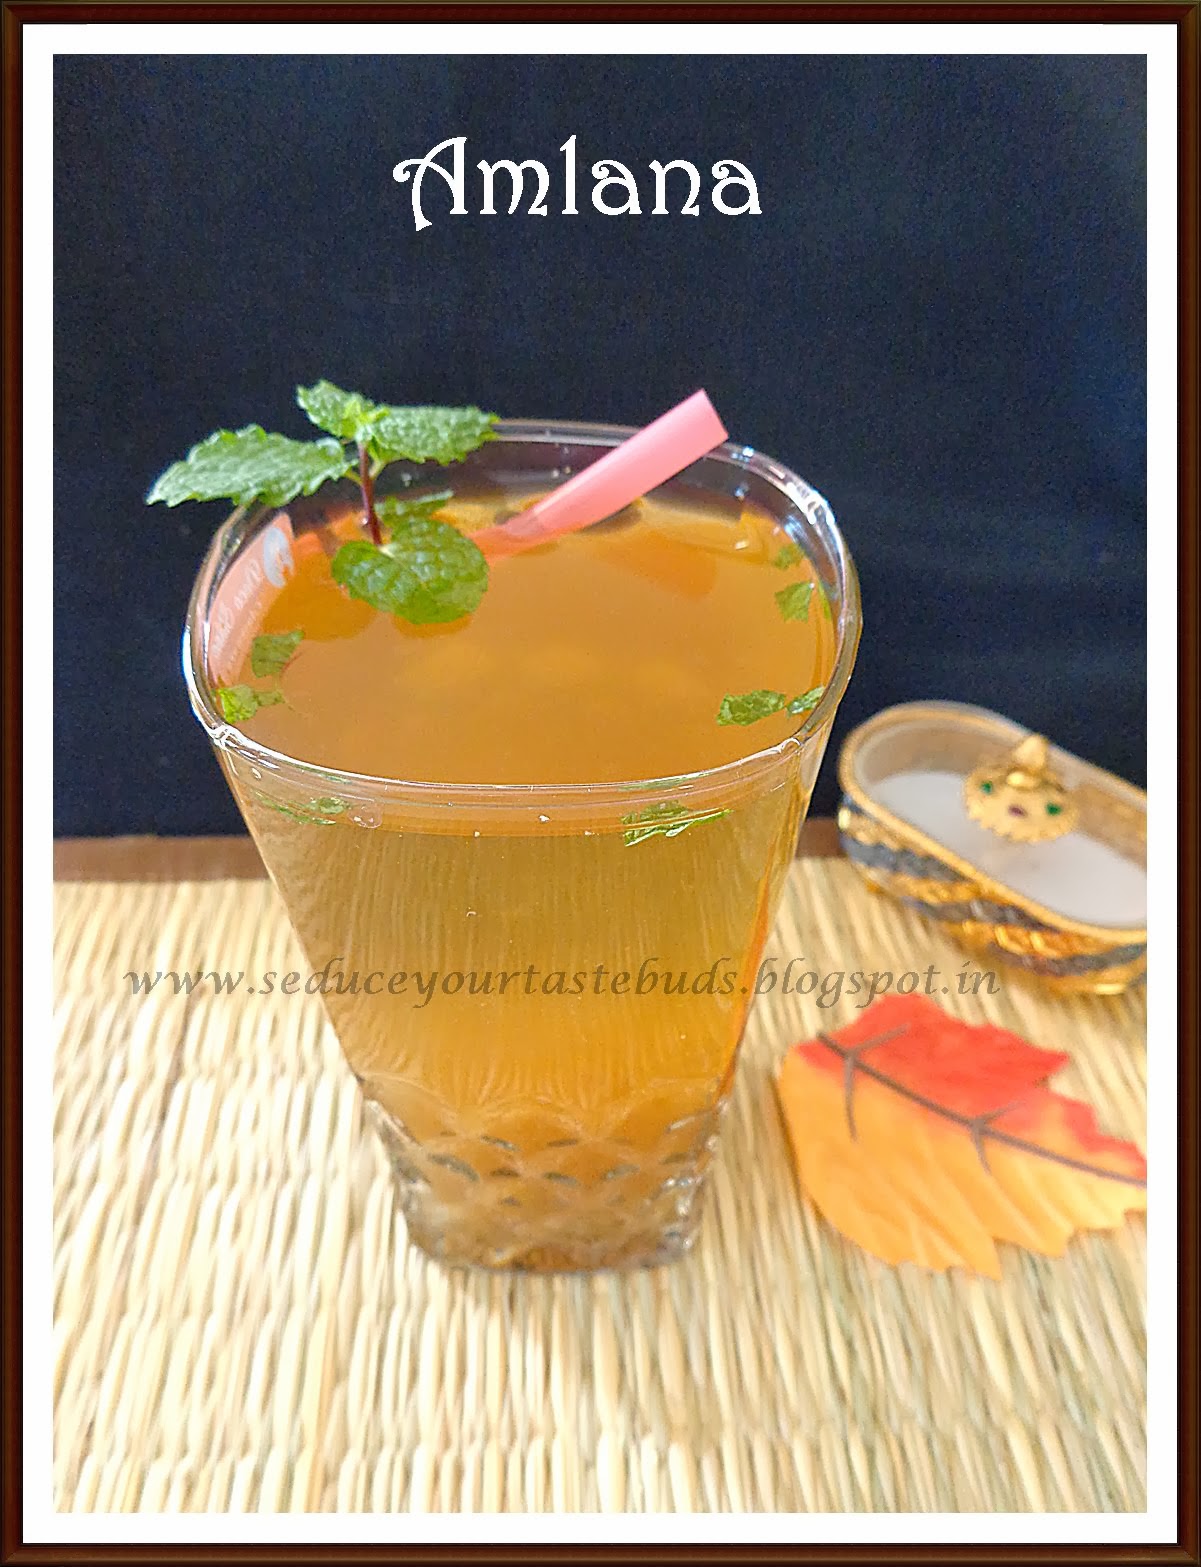 Amlana- Cooling Tamarind Drink from Rajastan